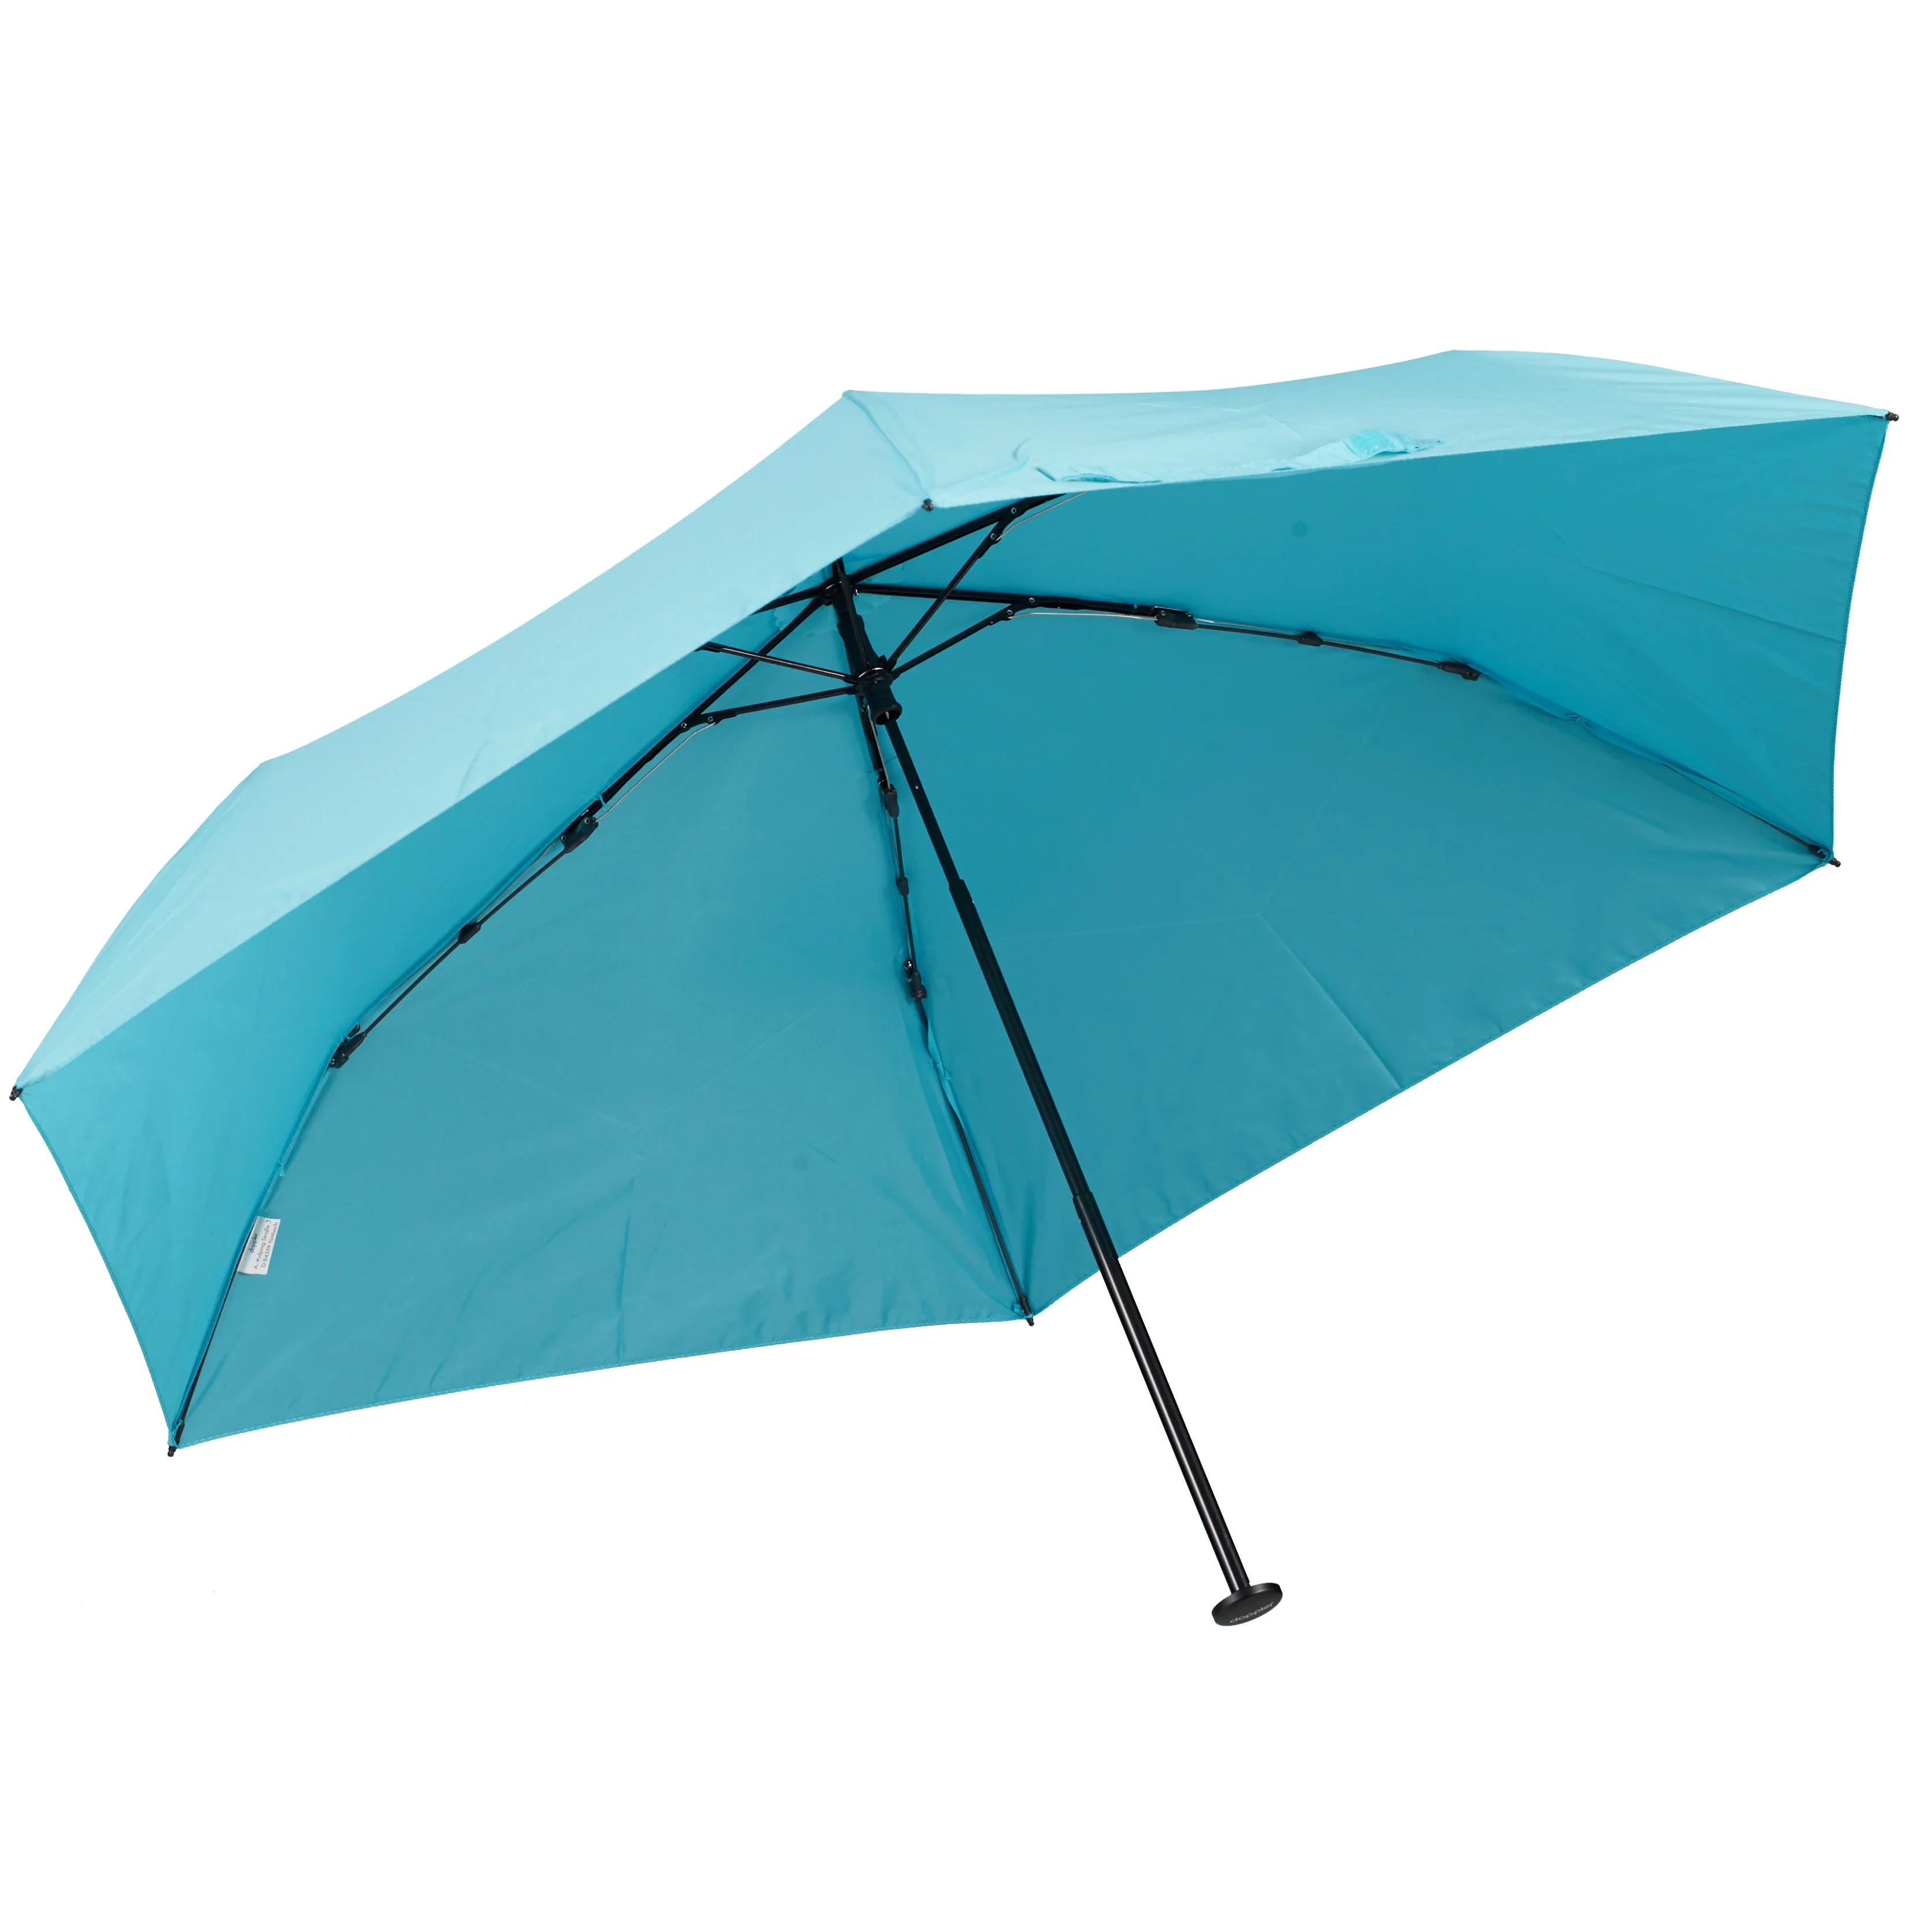 Doppler pocket - umbrellas pocket Zero99 umbrella cm black 21